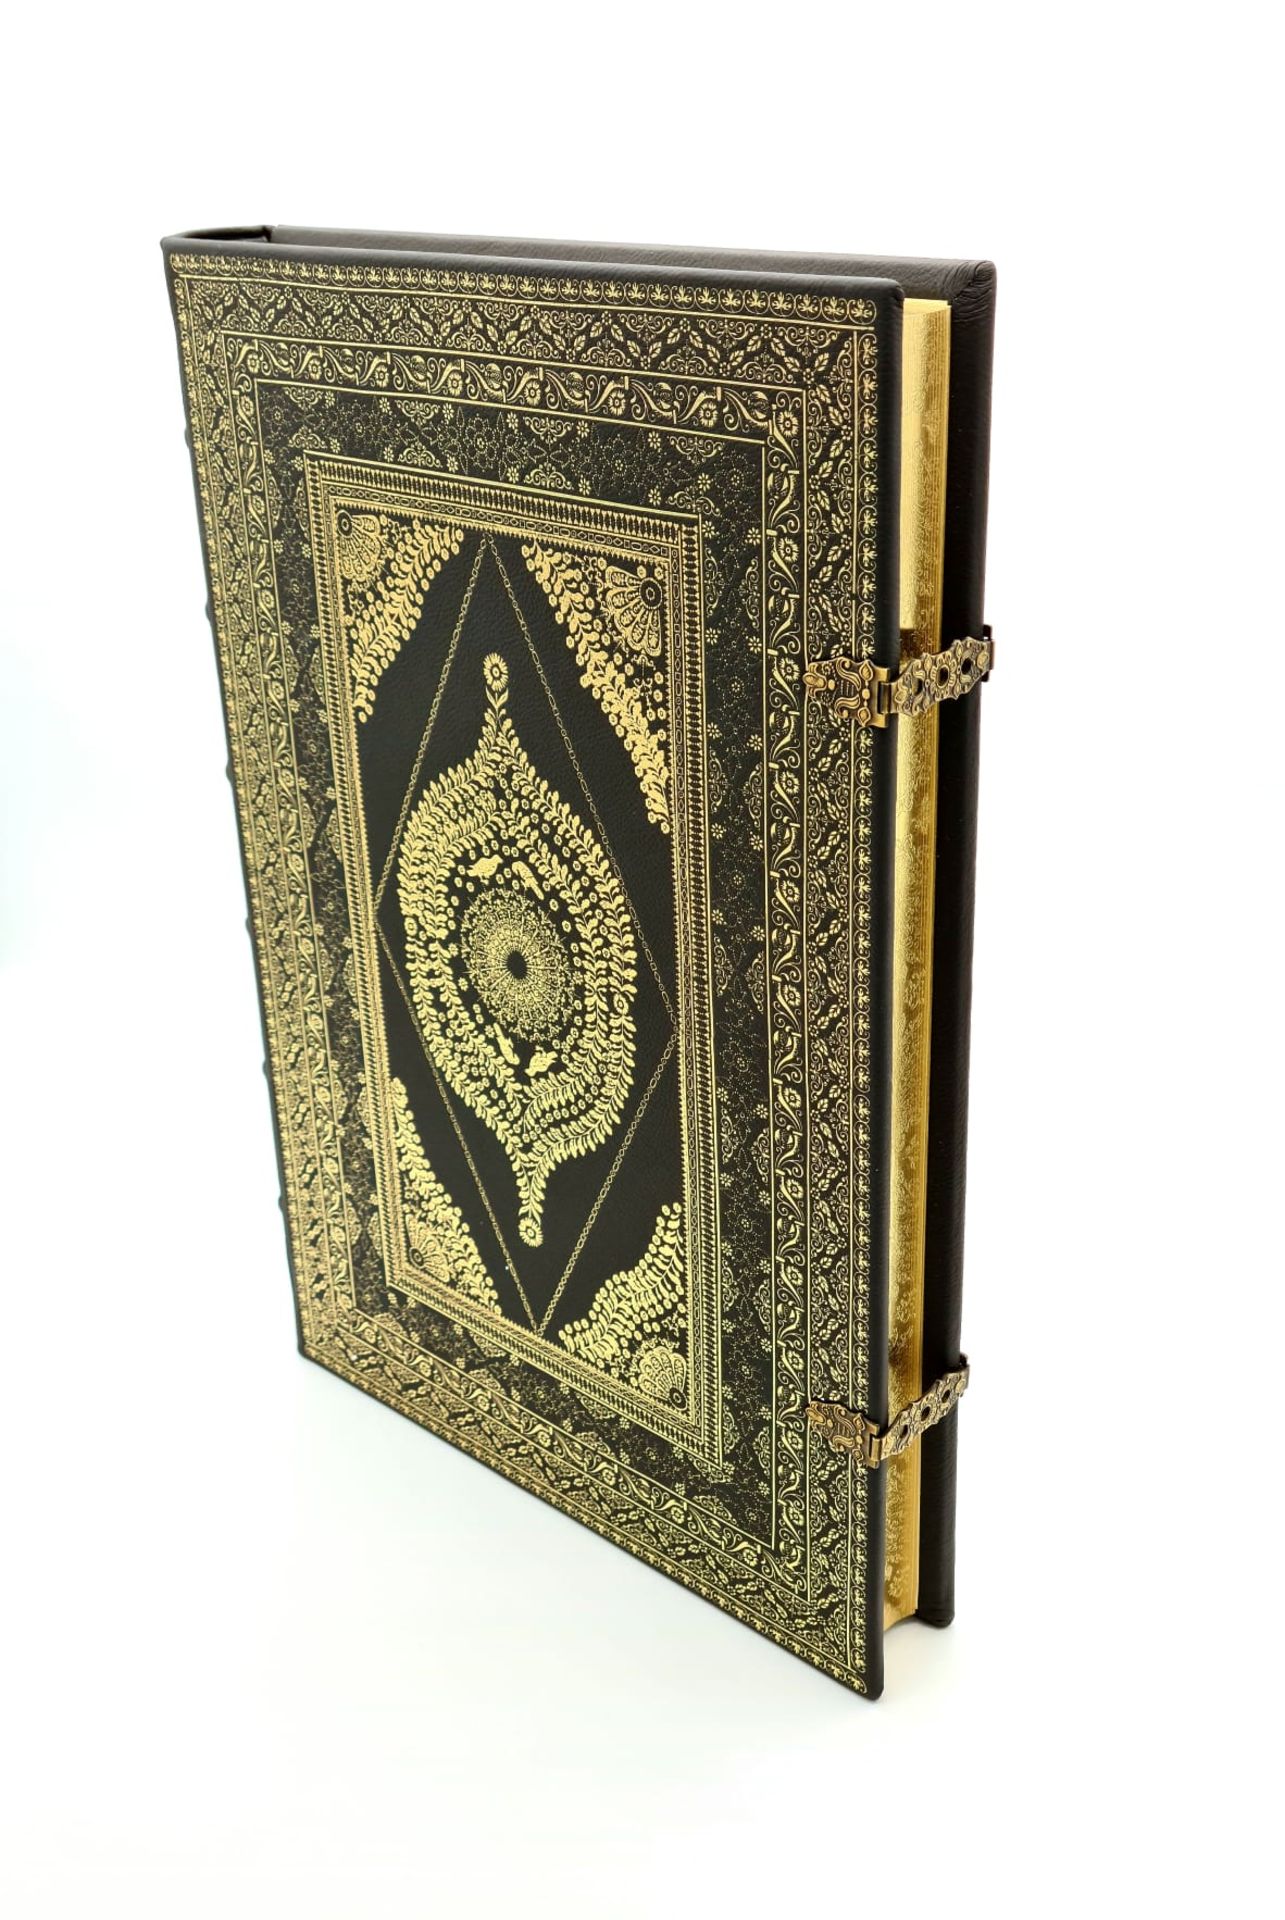 Bibel Biblia 1630 Matthäus Merian Kupferbibel ,Faksimile, nach dem handkolorierten Exemplar Ausst.